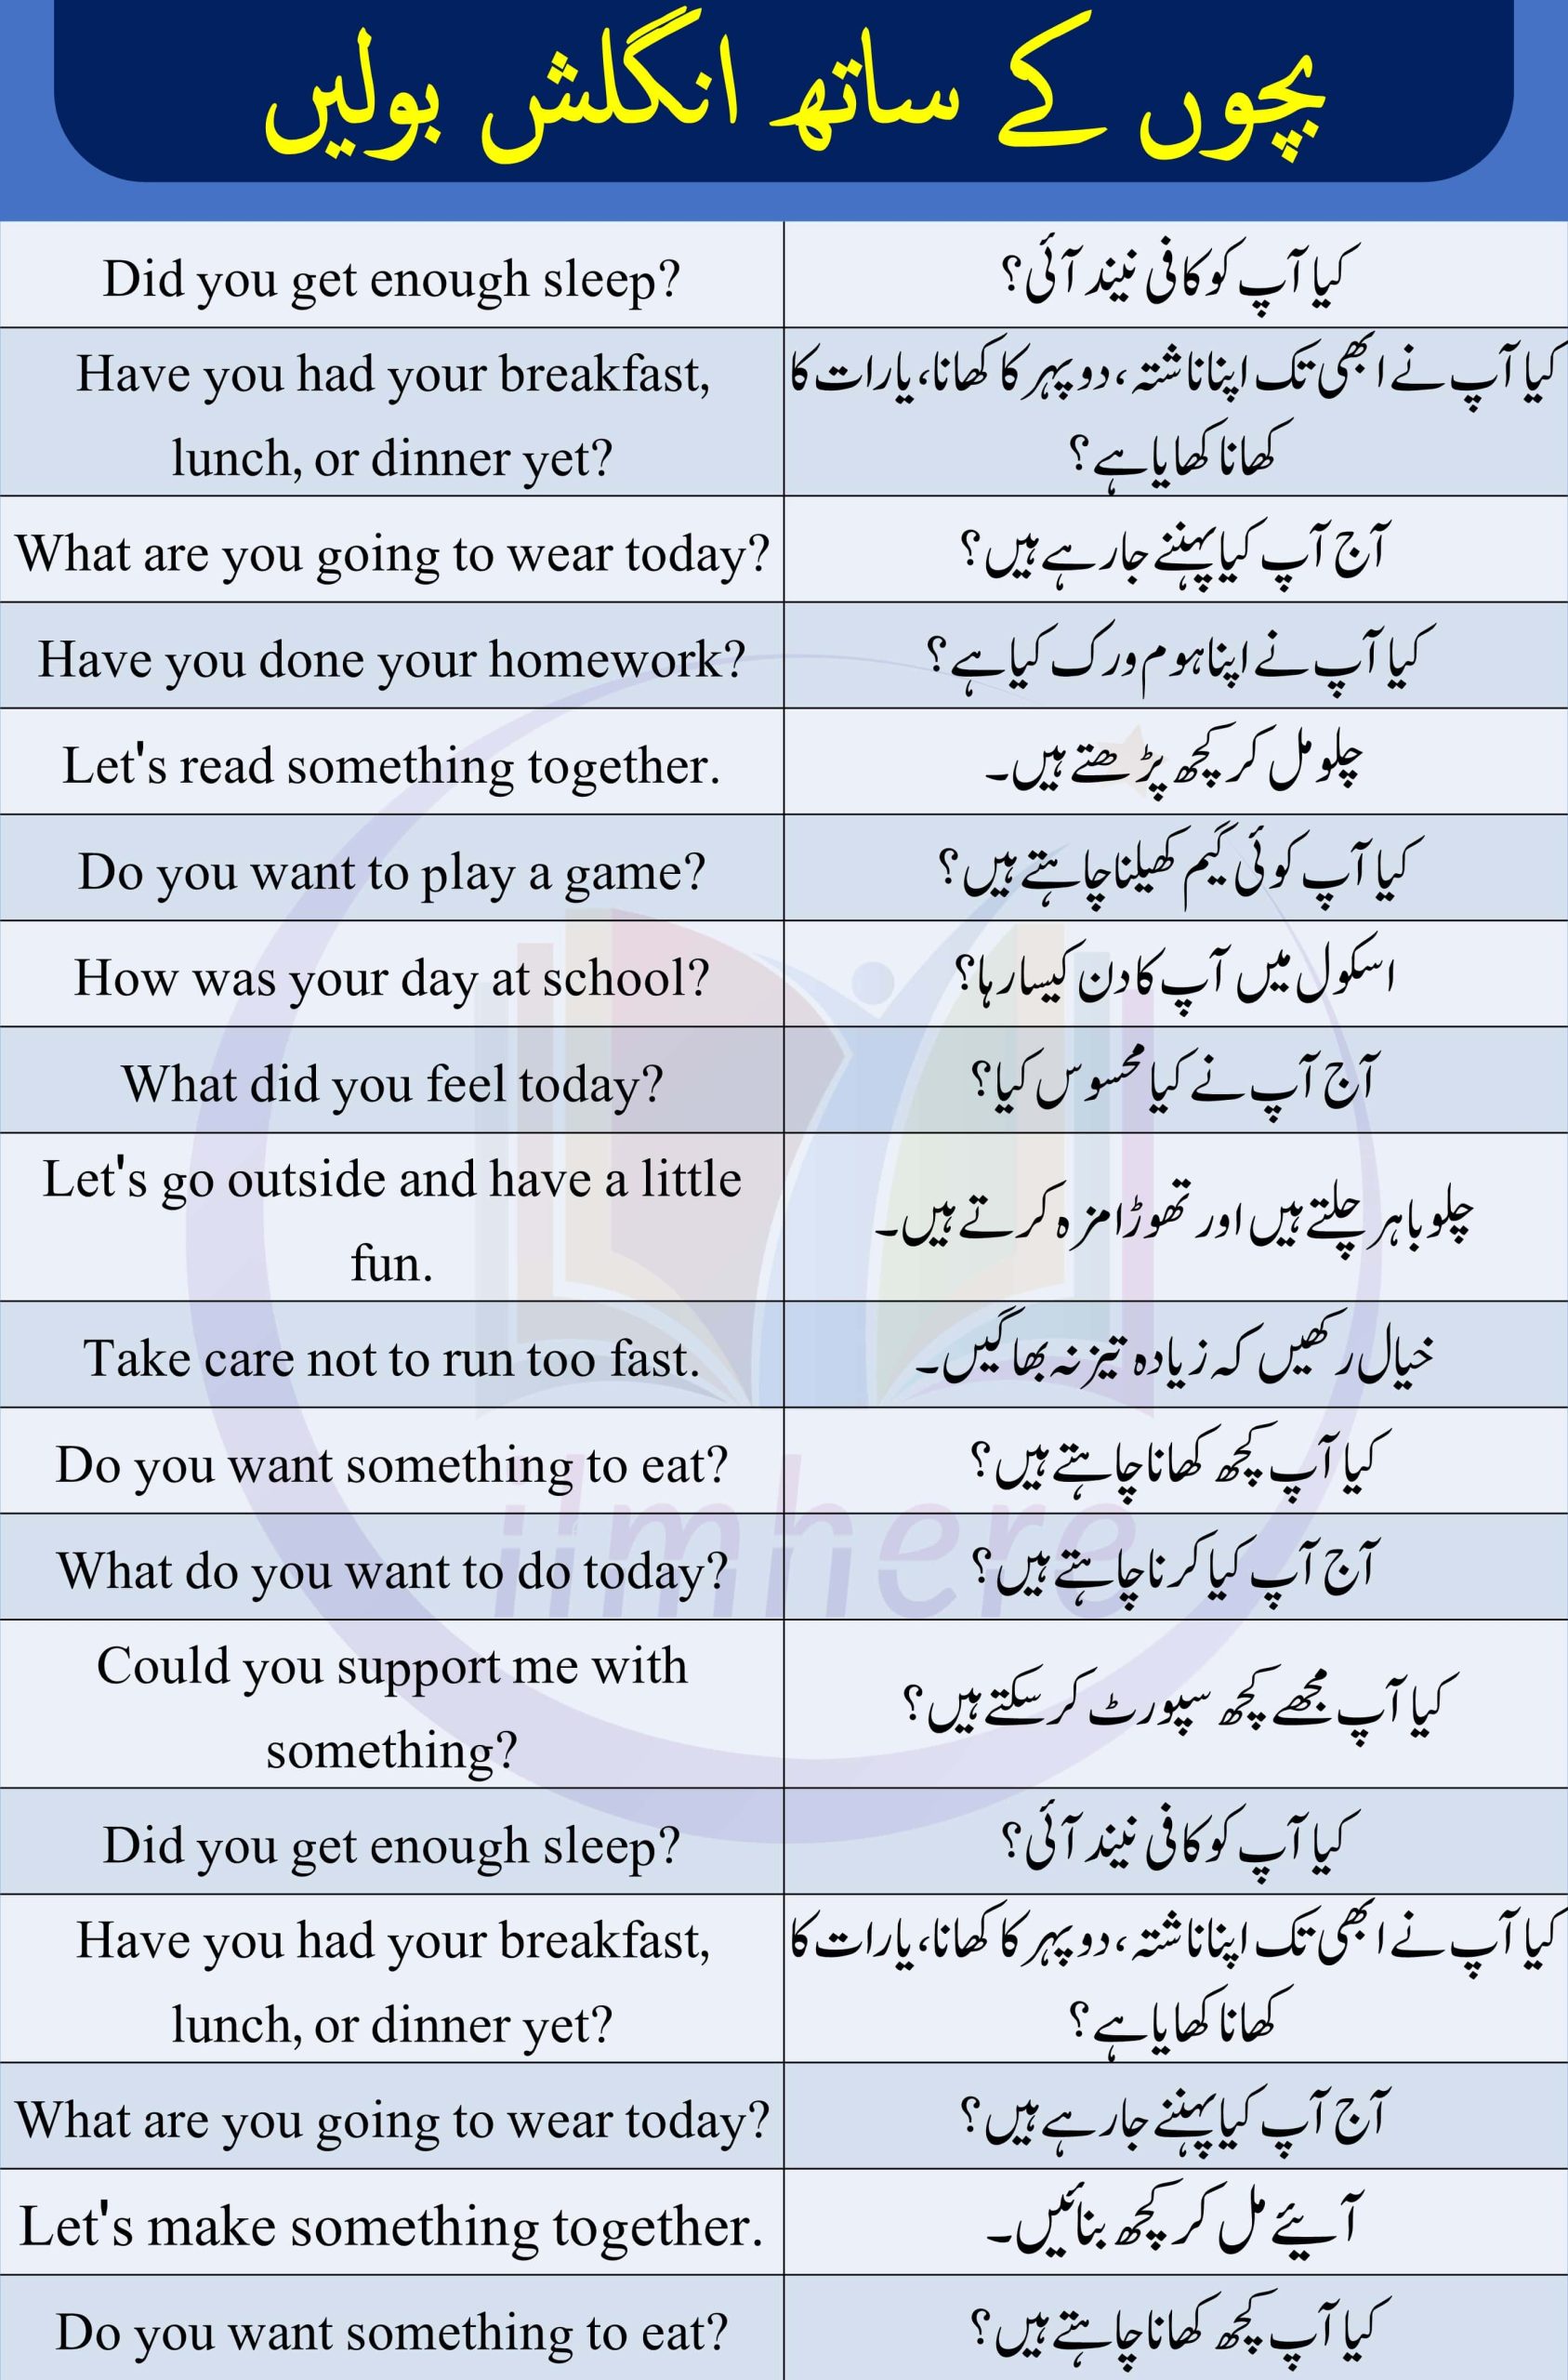 English Sentences for Parents To Speak with Children in Urdu